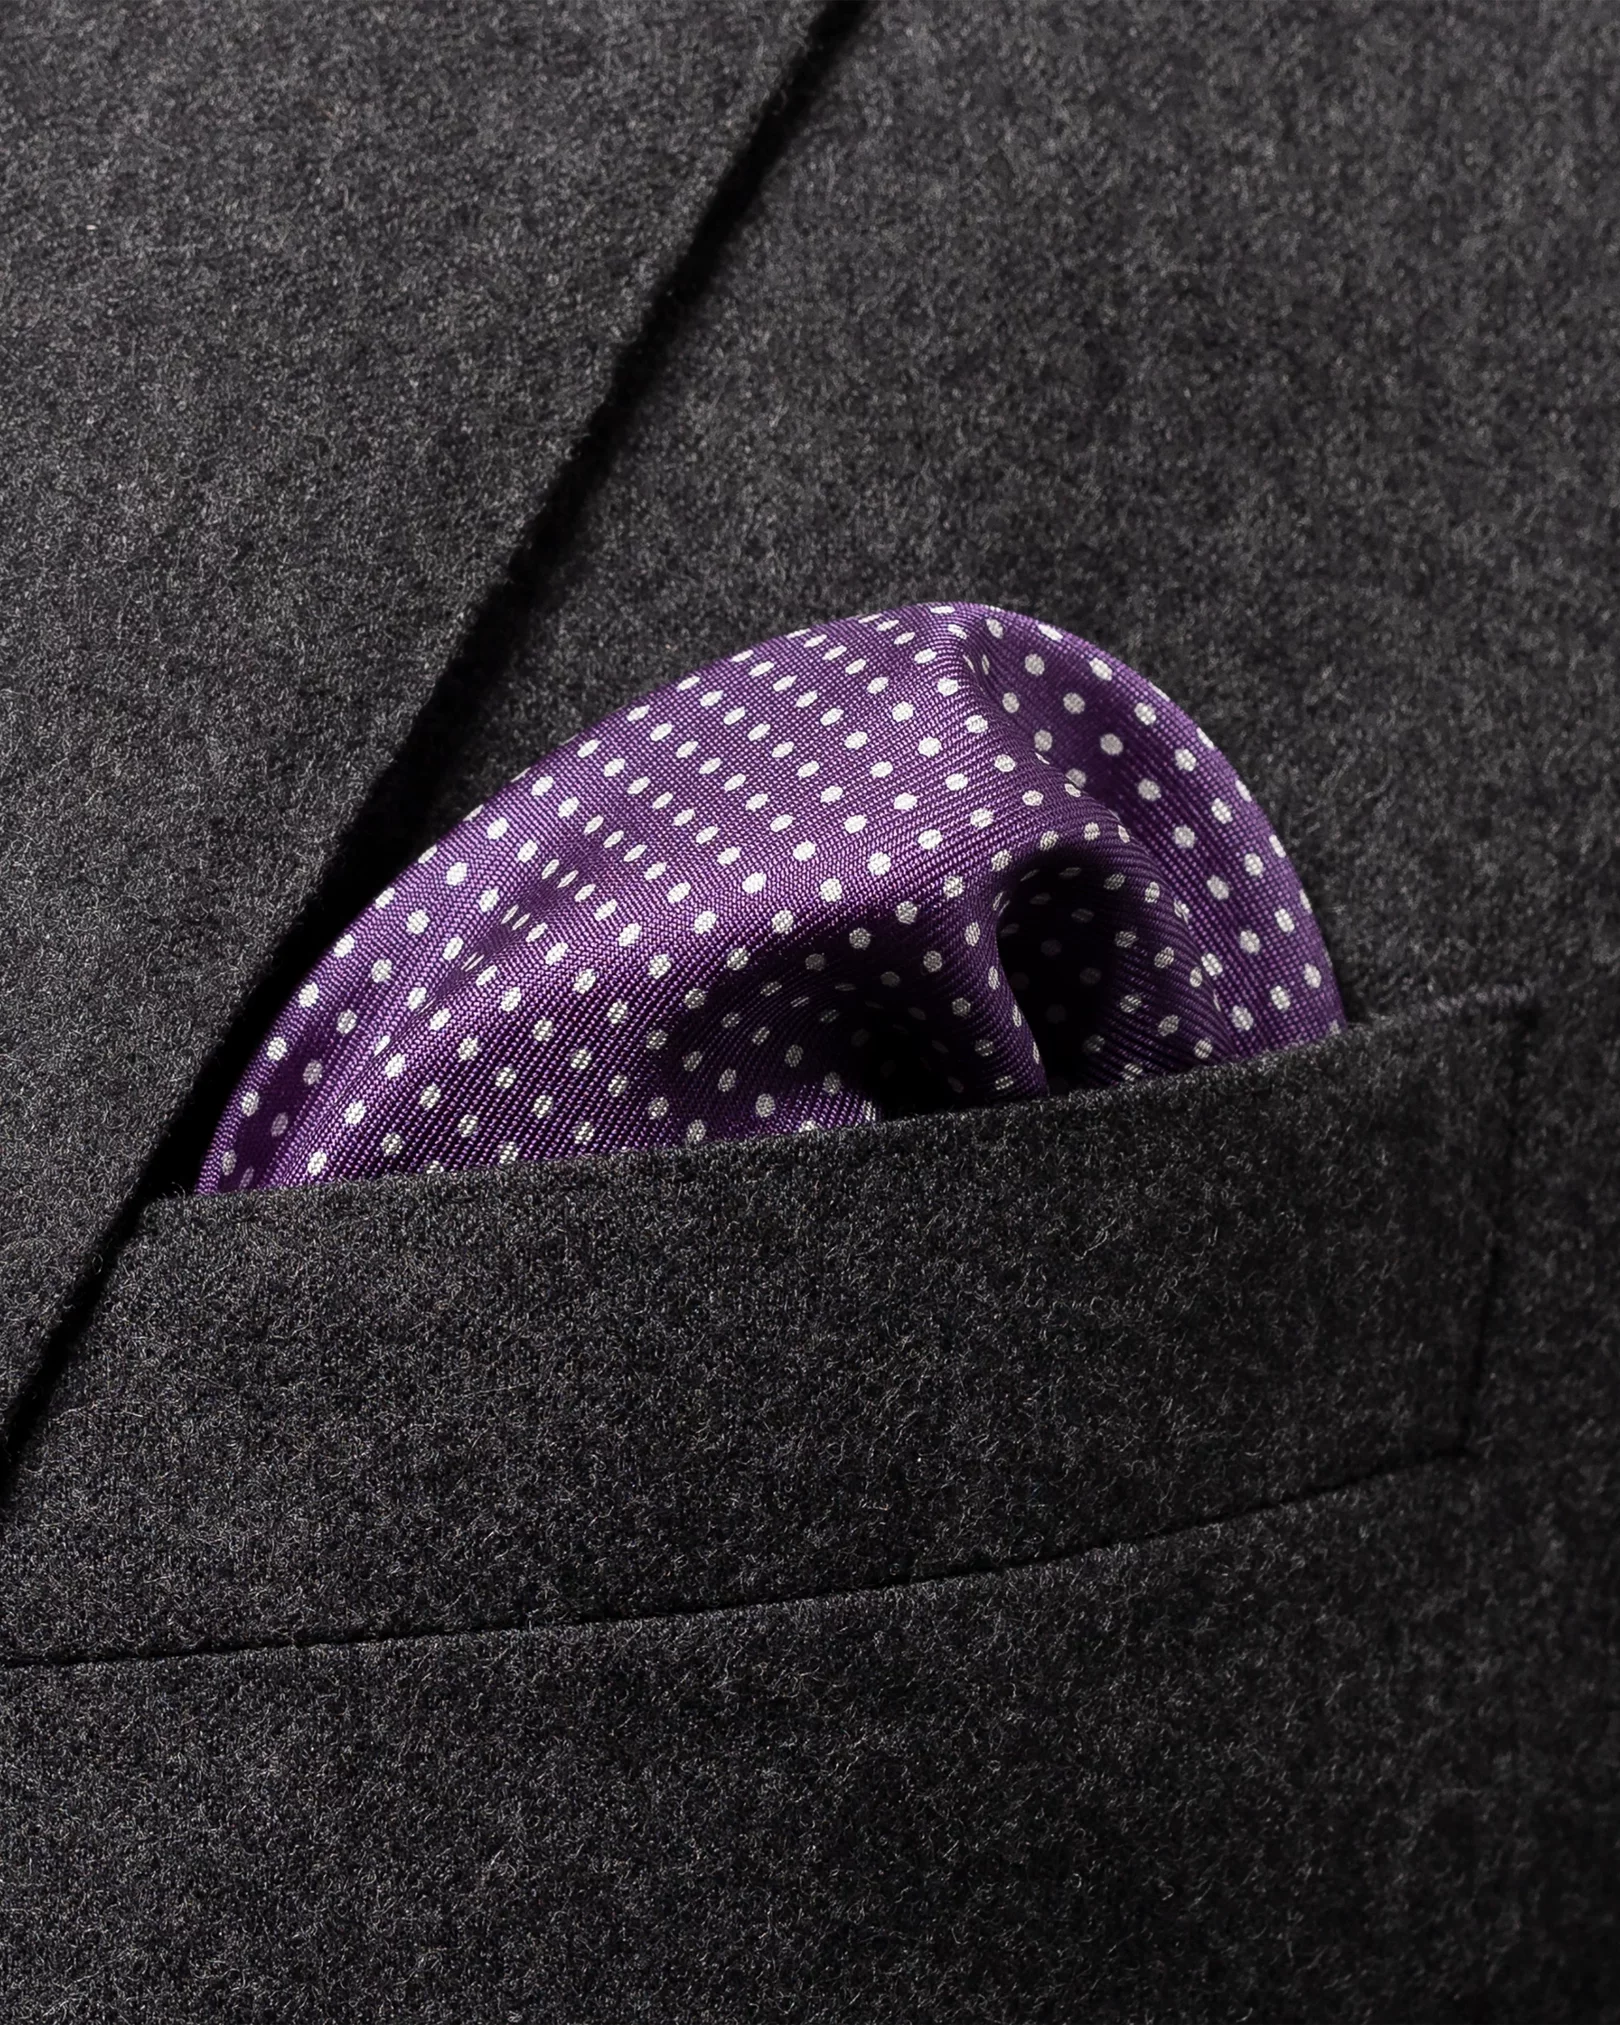 Eton - purple polka dots silk pocket square